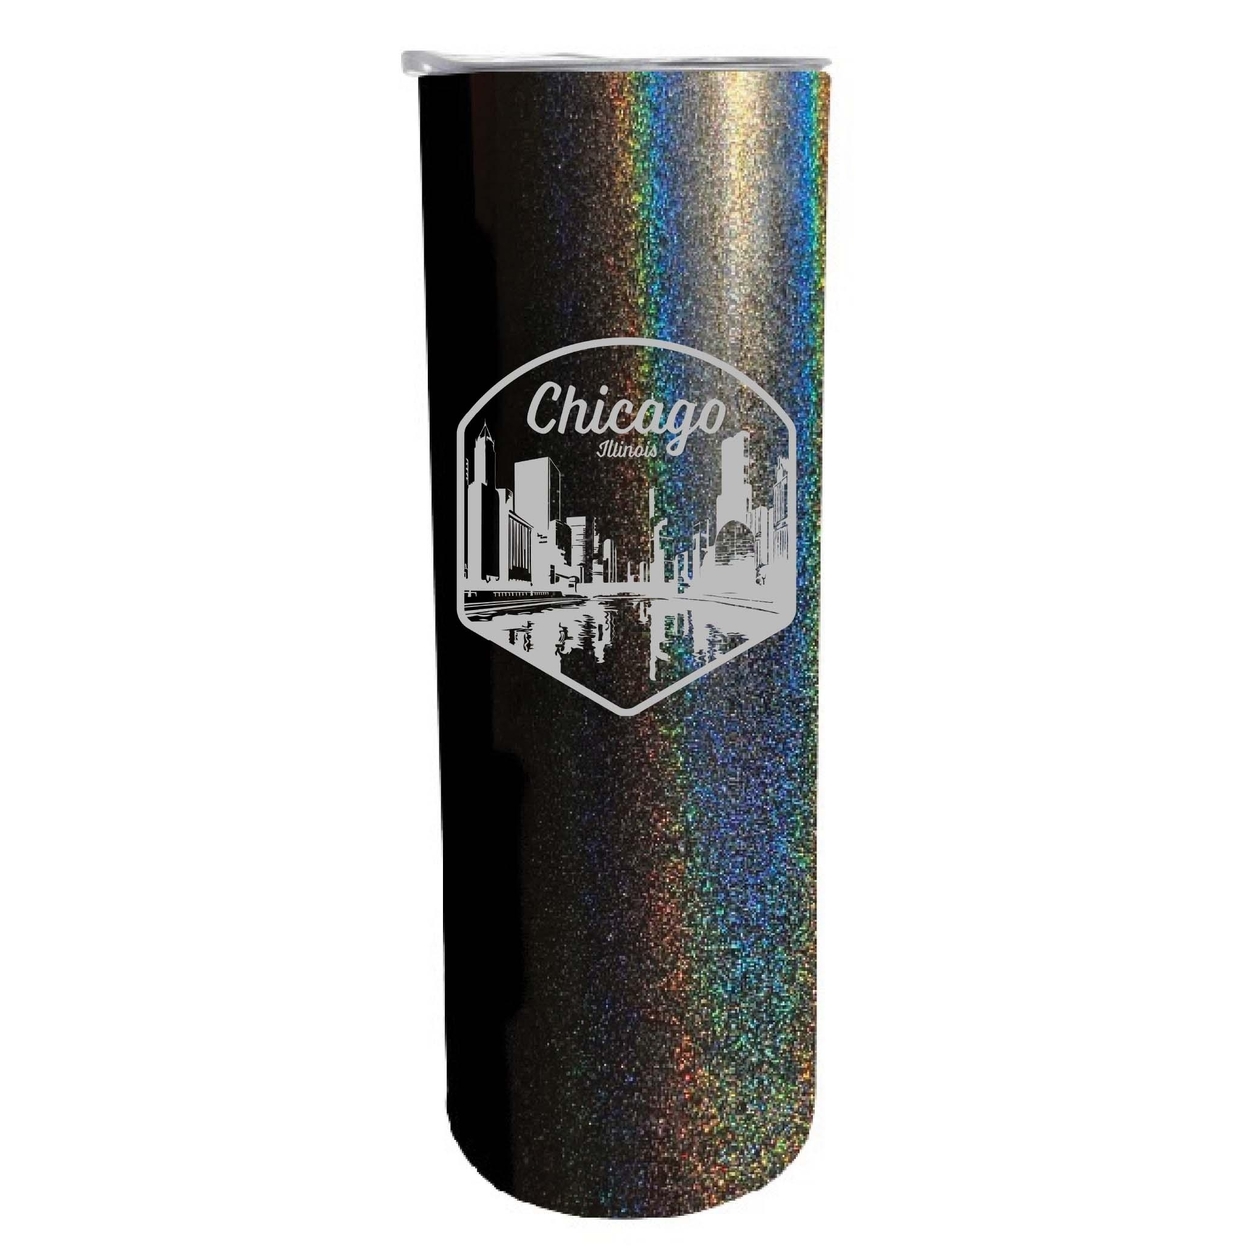 Chicago Illinois Souvenir 20 Oz Engraved Insulated Skinny Tumbler - Black Glitter,,Single Unit